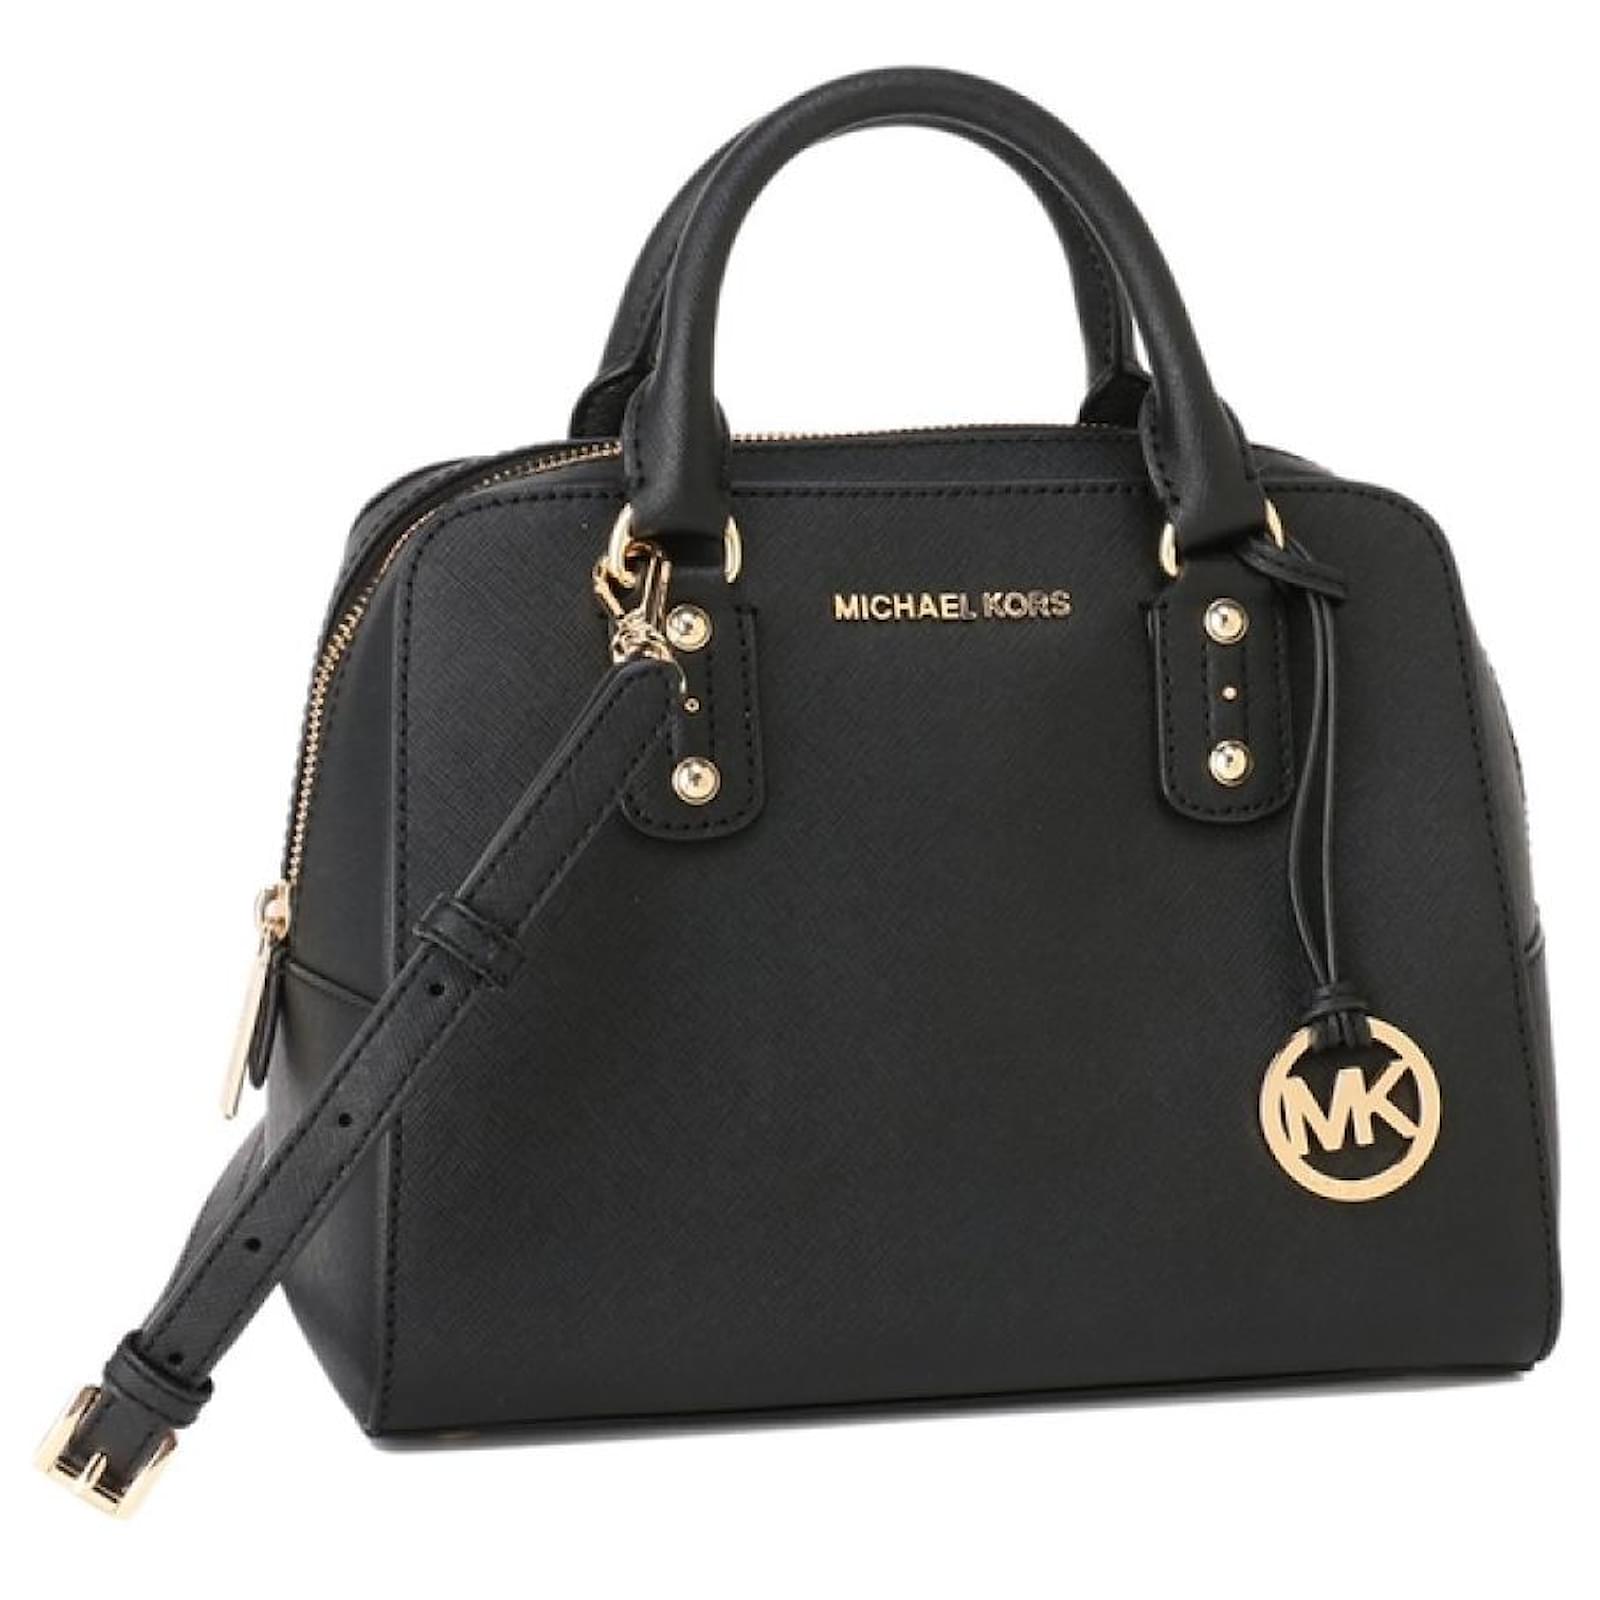 MICHAEL KORS womens bag bag jet set item crossbody brown vanilla black   eBay